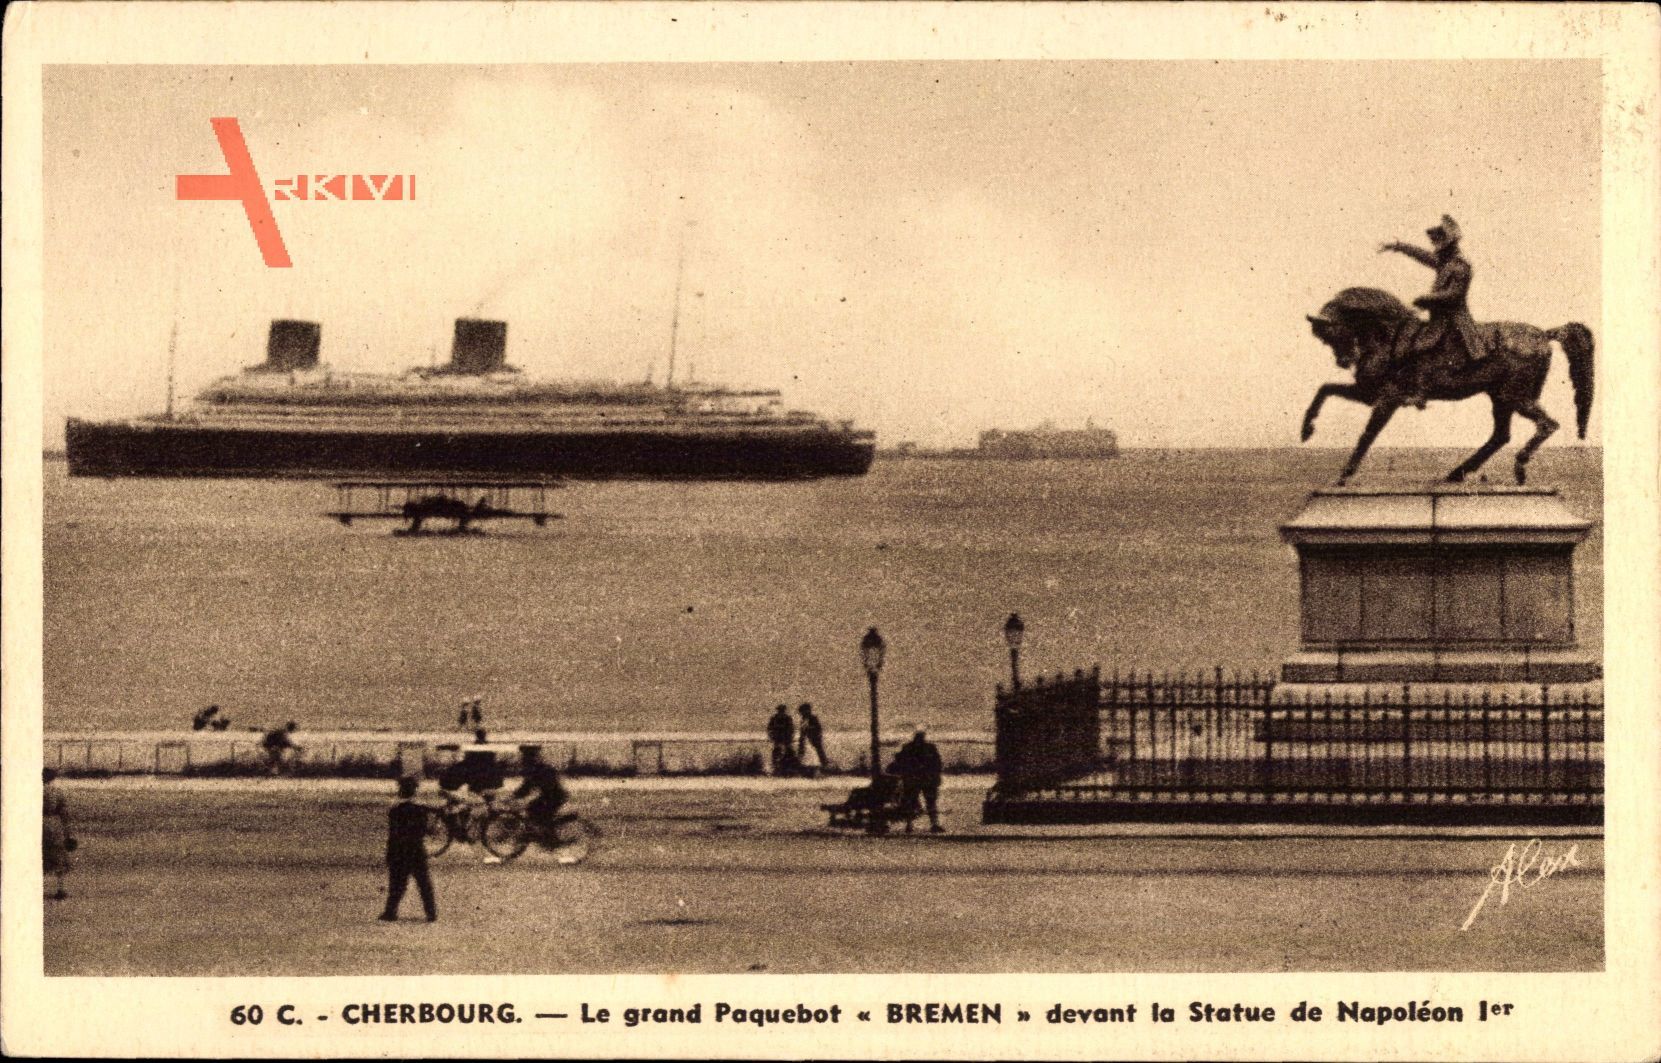 Cherbourg, Paquebot Bremen, Norddeutscher Lloyd Bremen, Statue de Napoleon